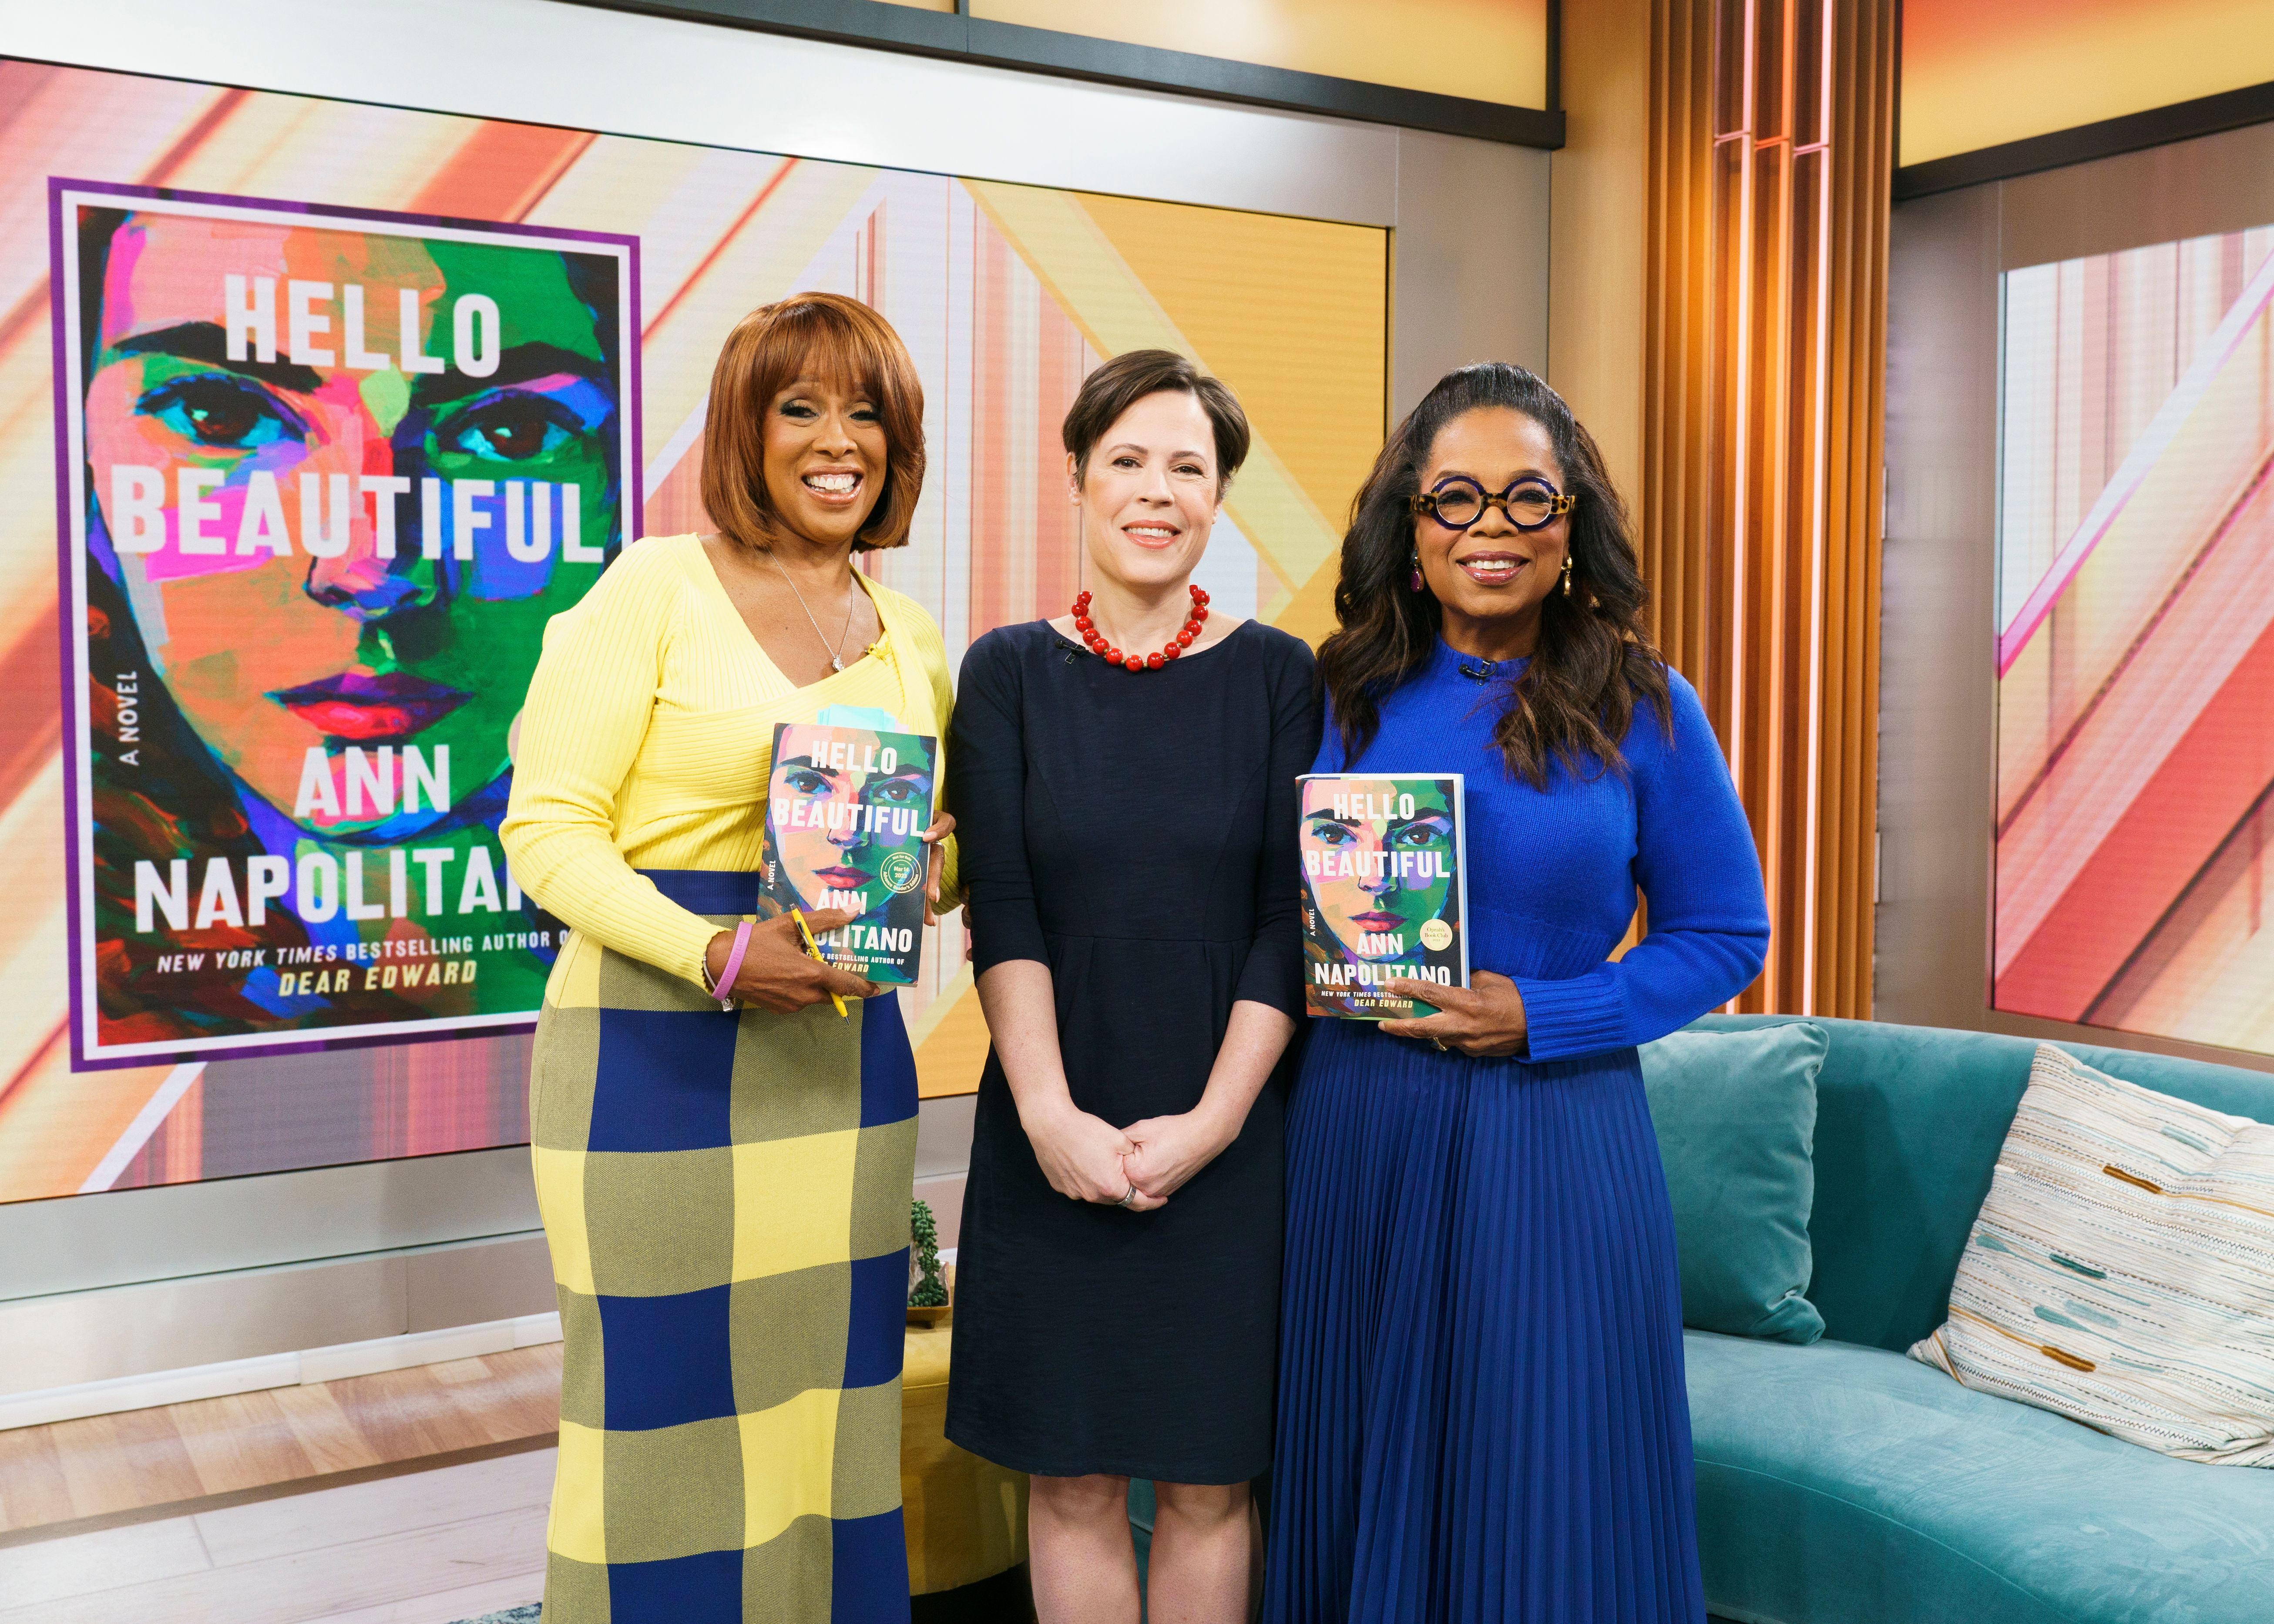 Hello Beautiful Becomes Oprahs Book Club 100th Pick